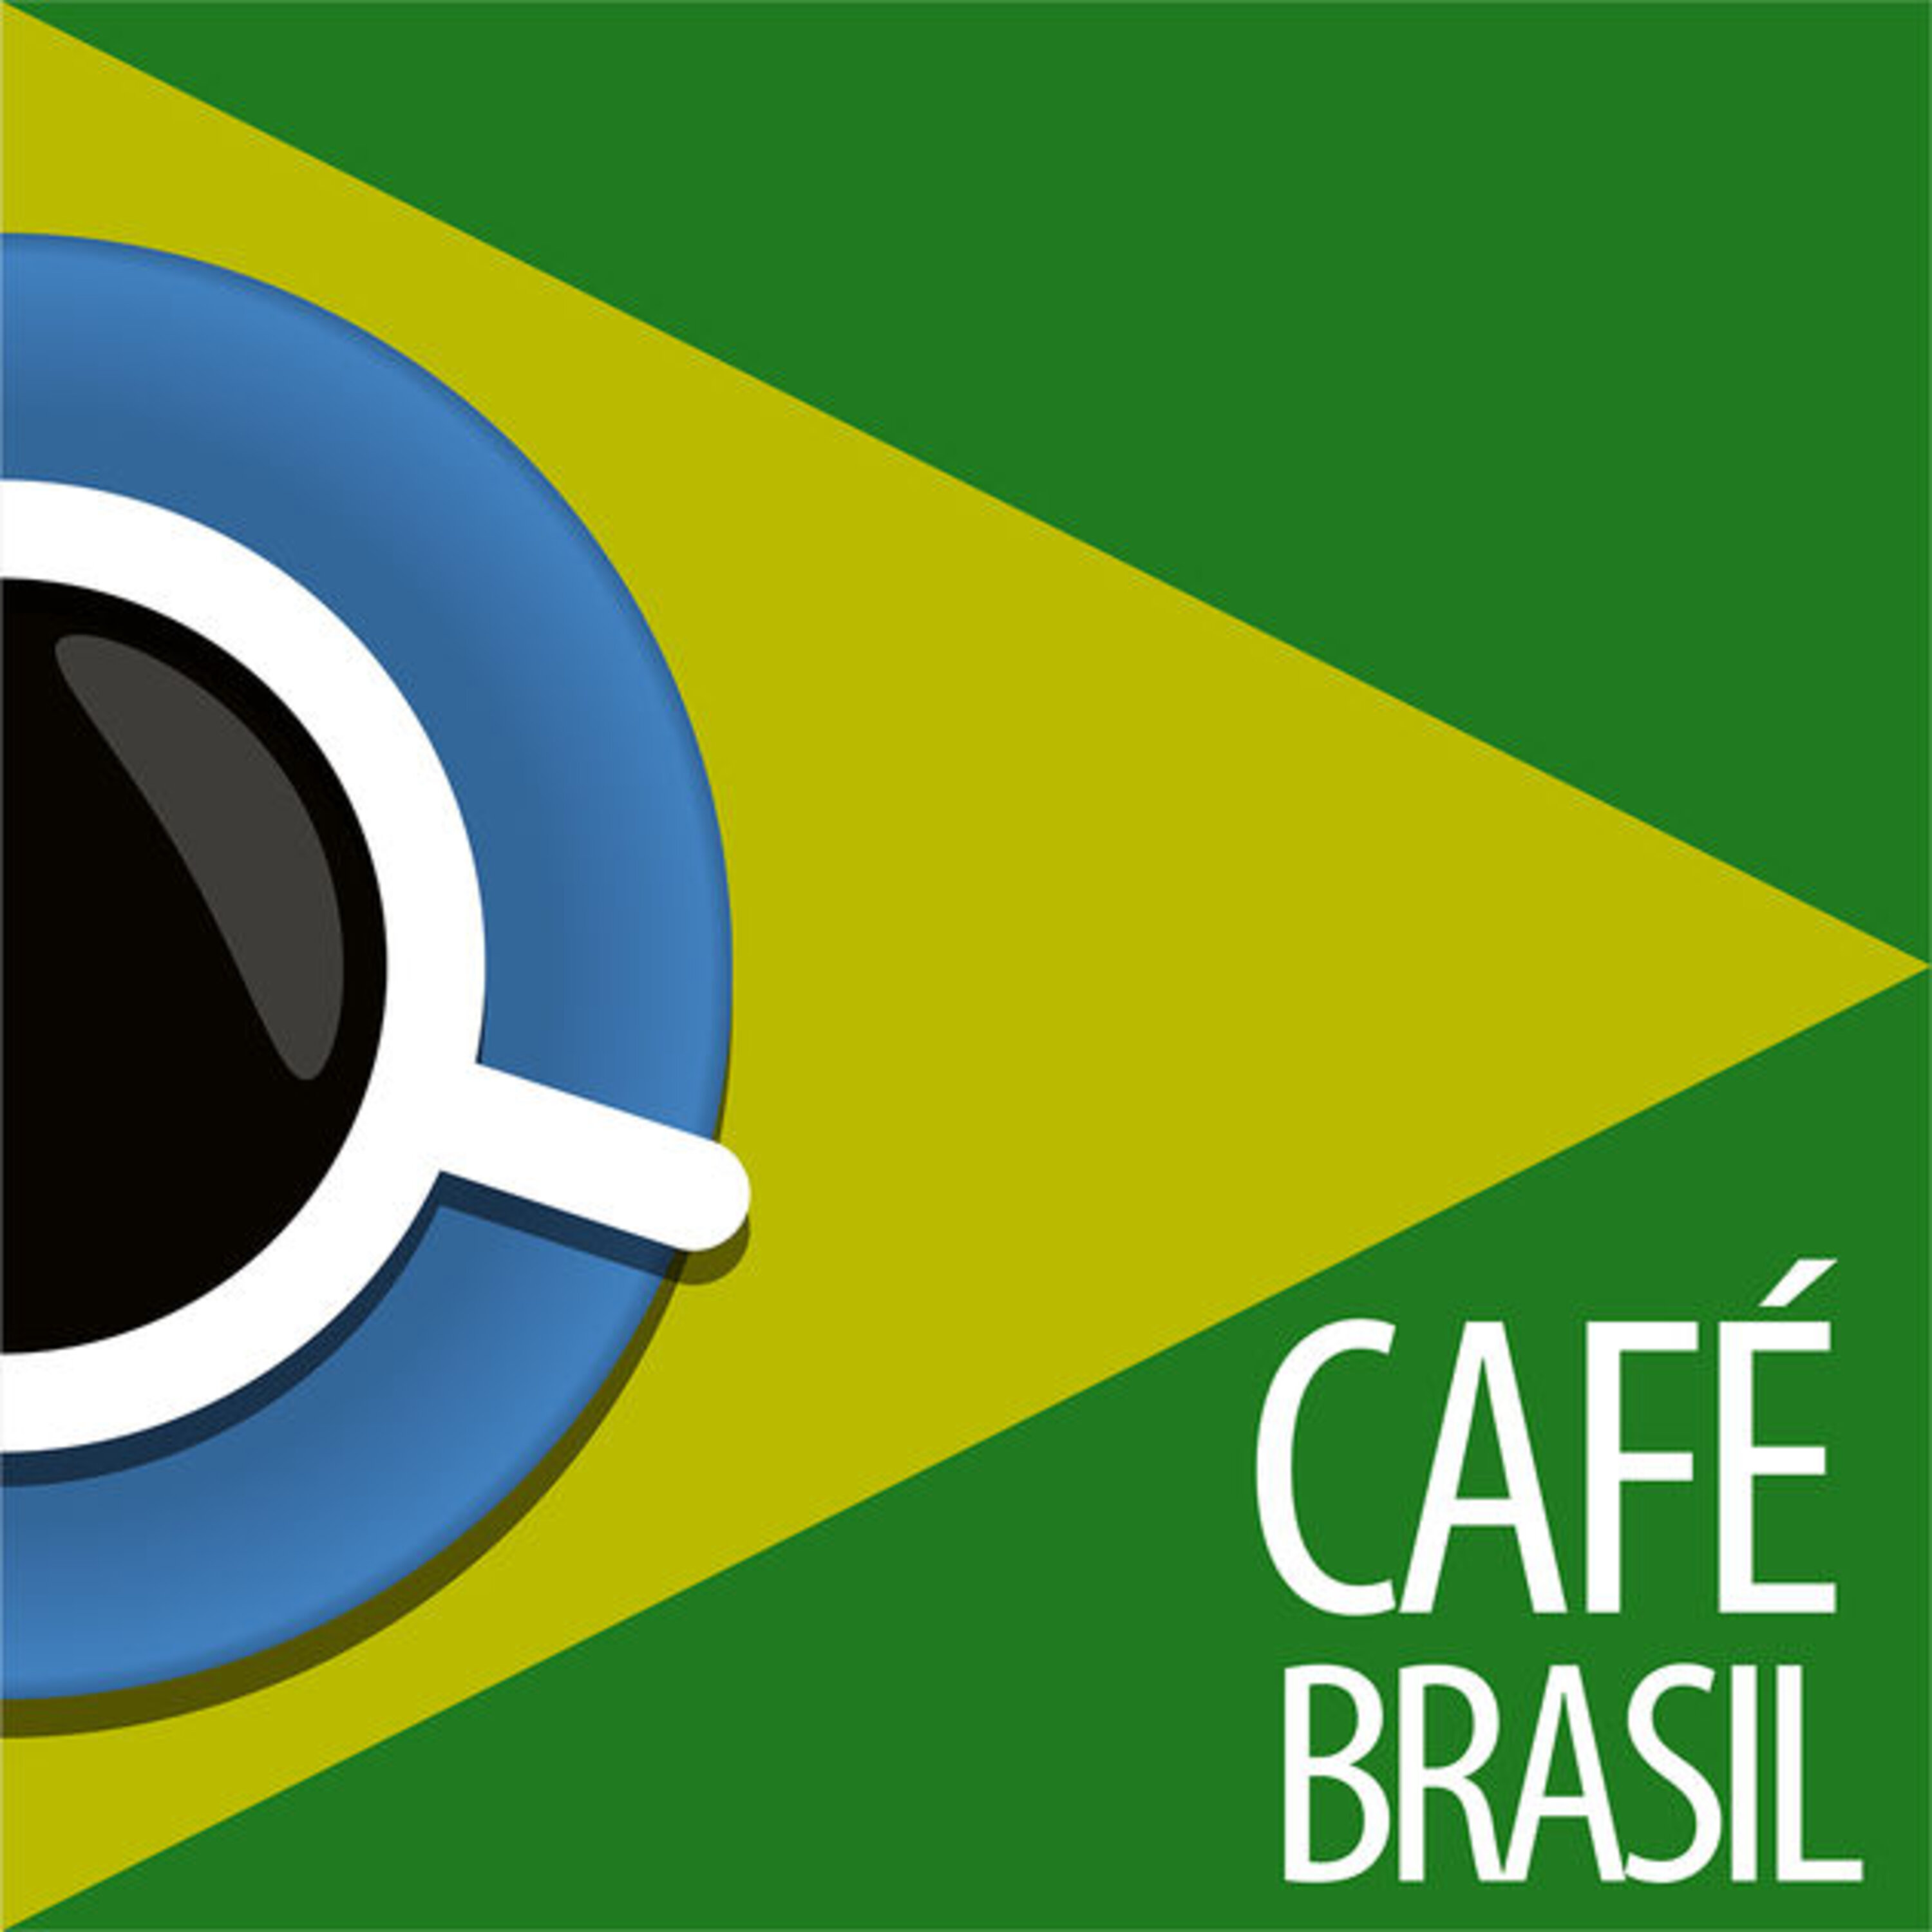 Cafe Brasil 783 - Integridade intelectual